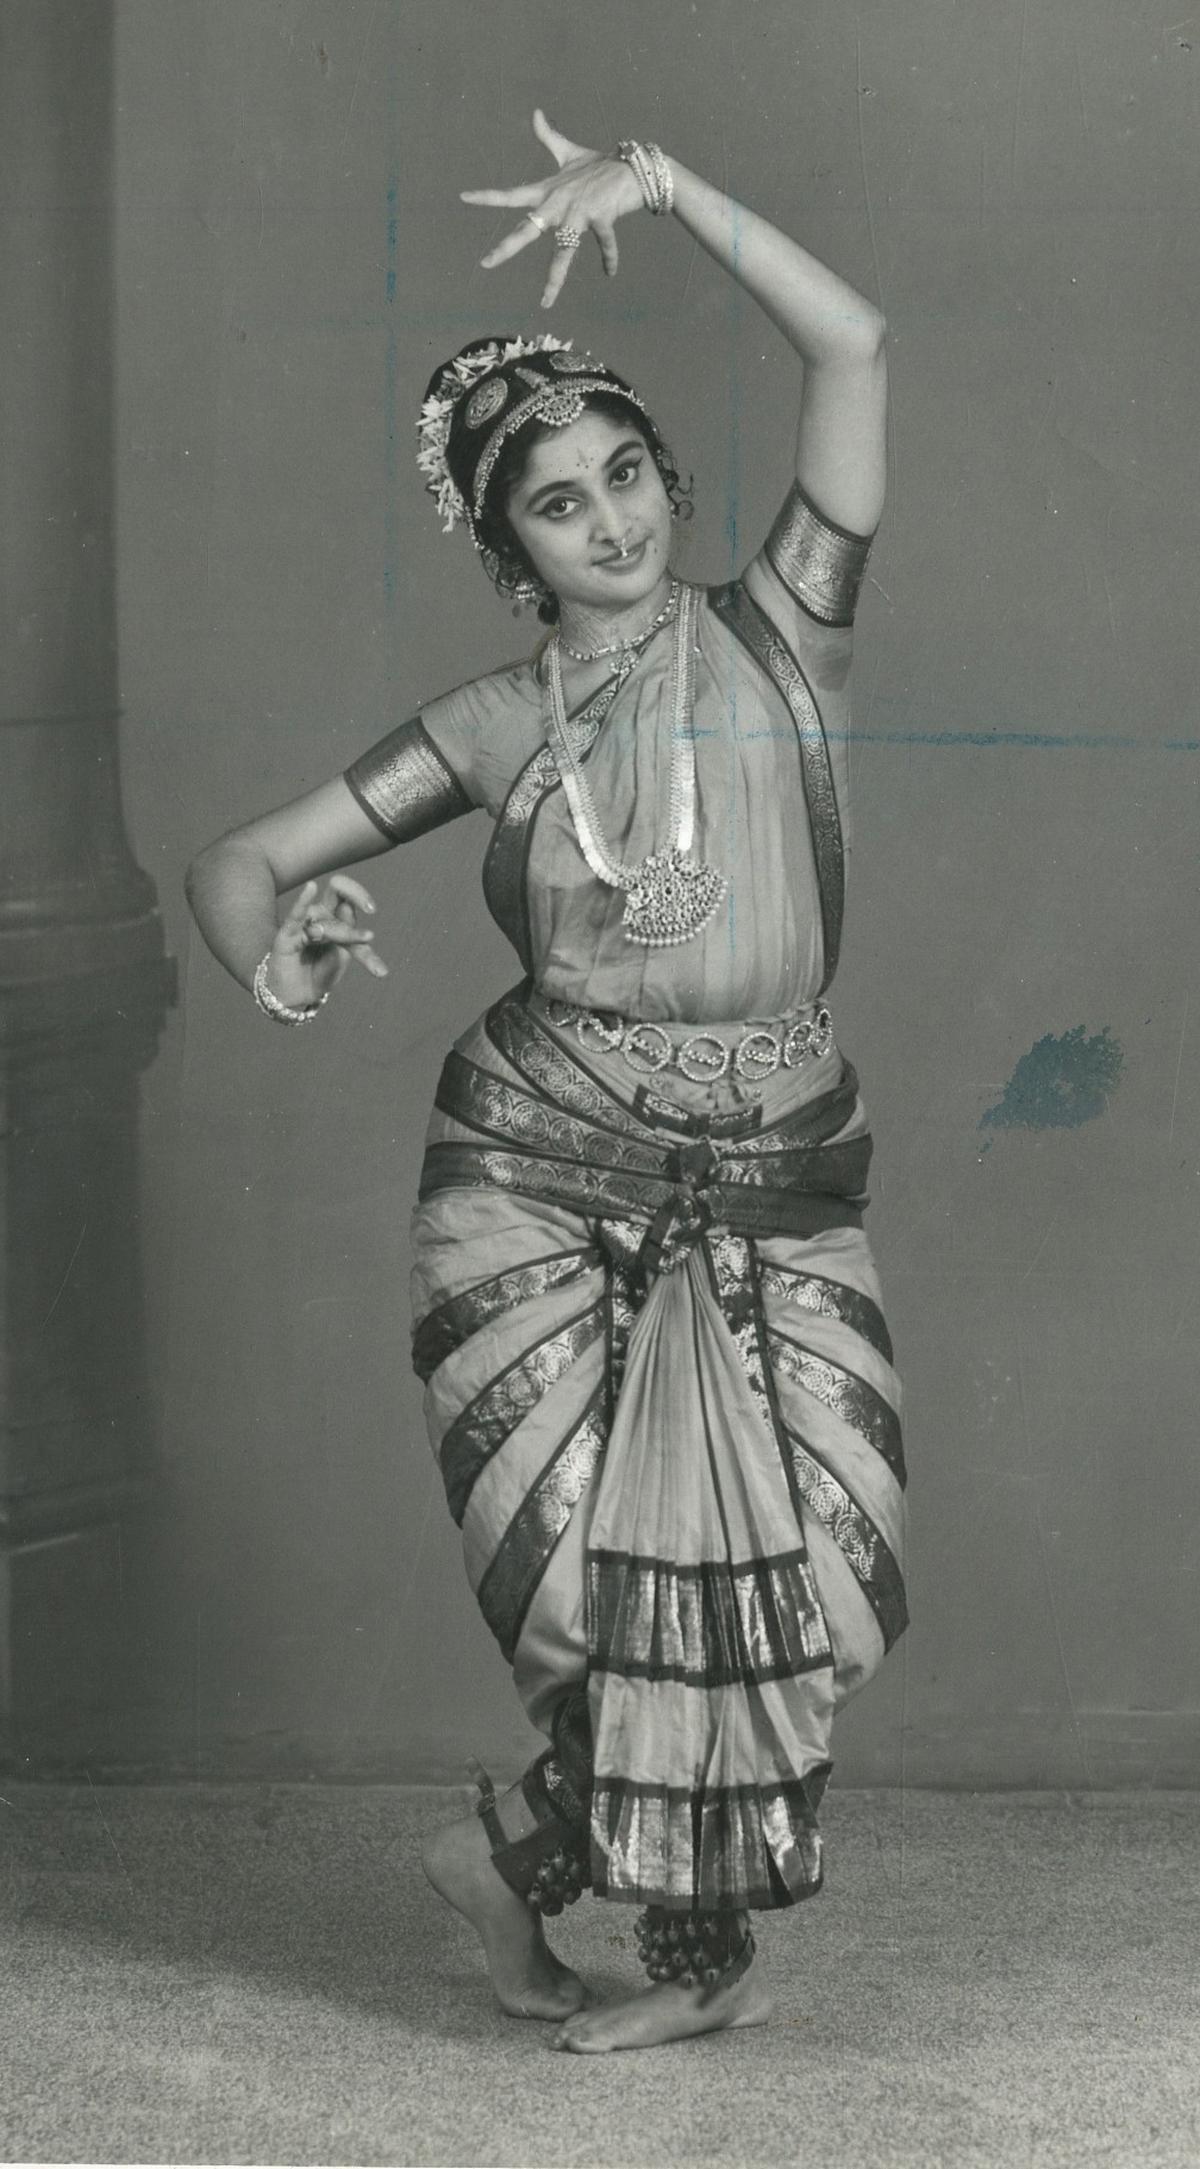 Chitra Visweswaran’s performance under the auspices of Kala Mandir on March 28, 1976.